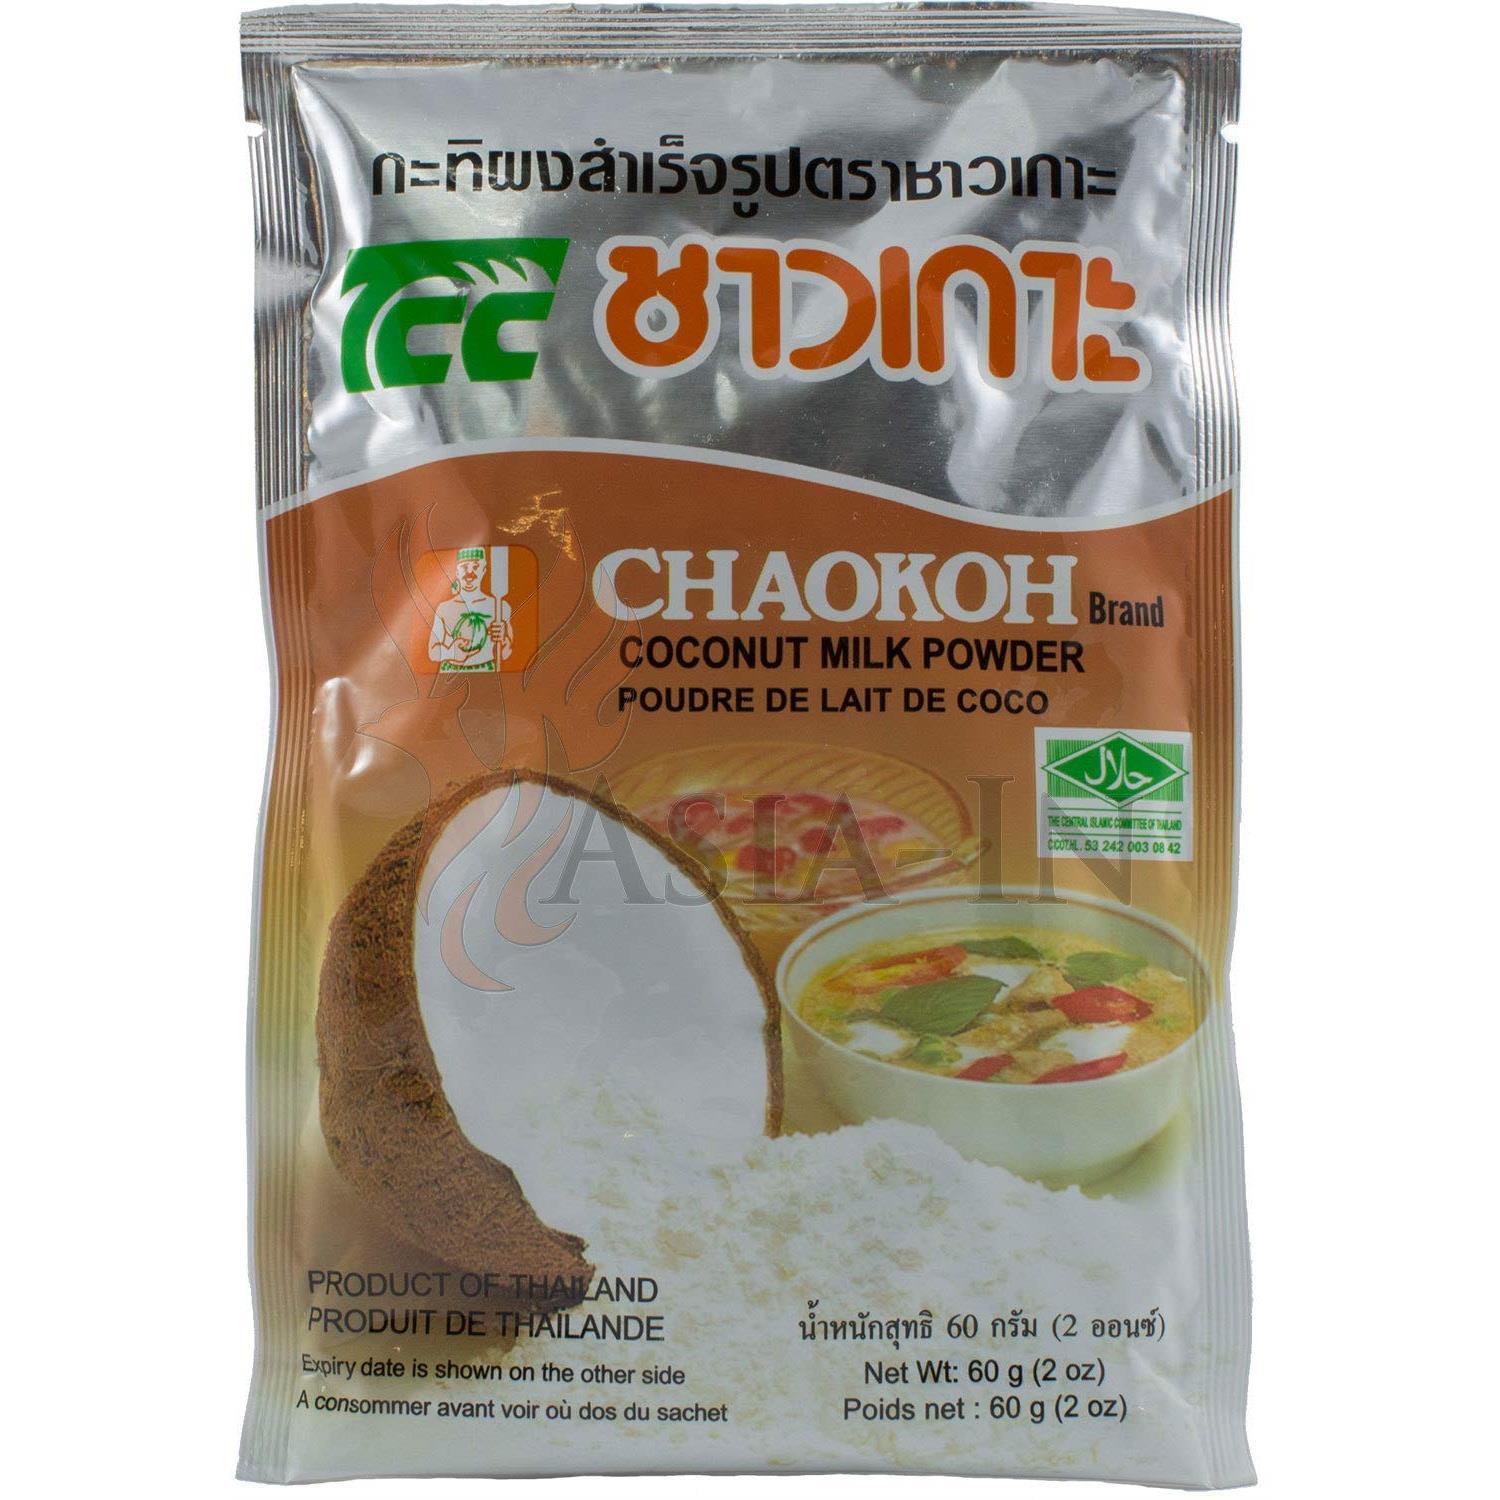 Chaokoh Coconut Milk Powder 2 oz